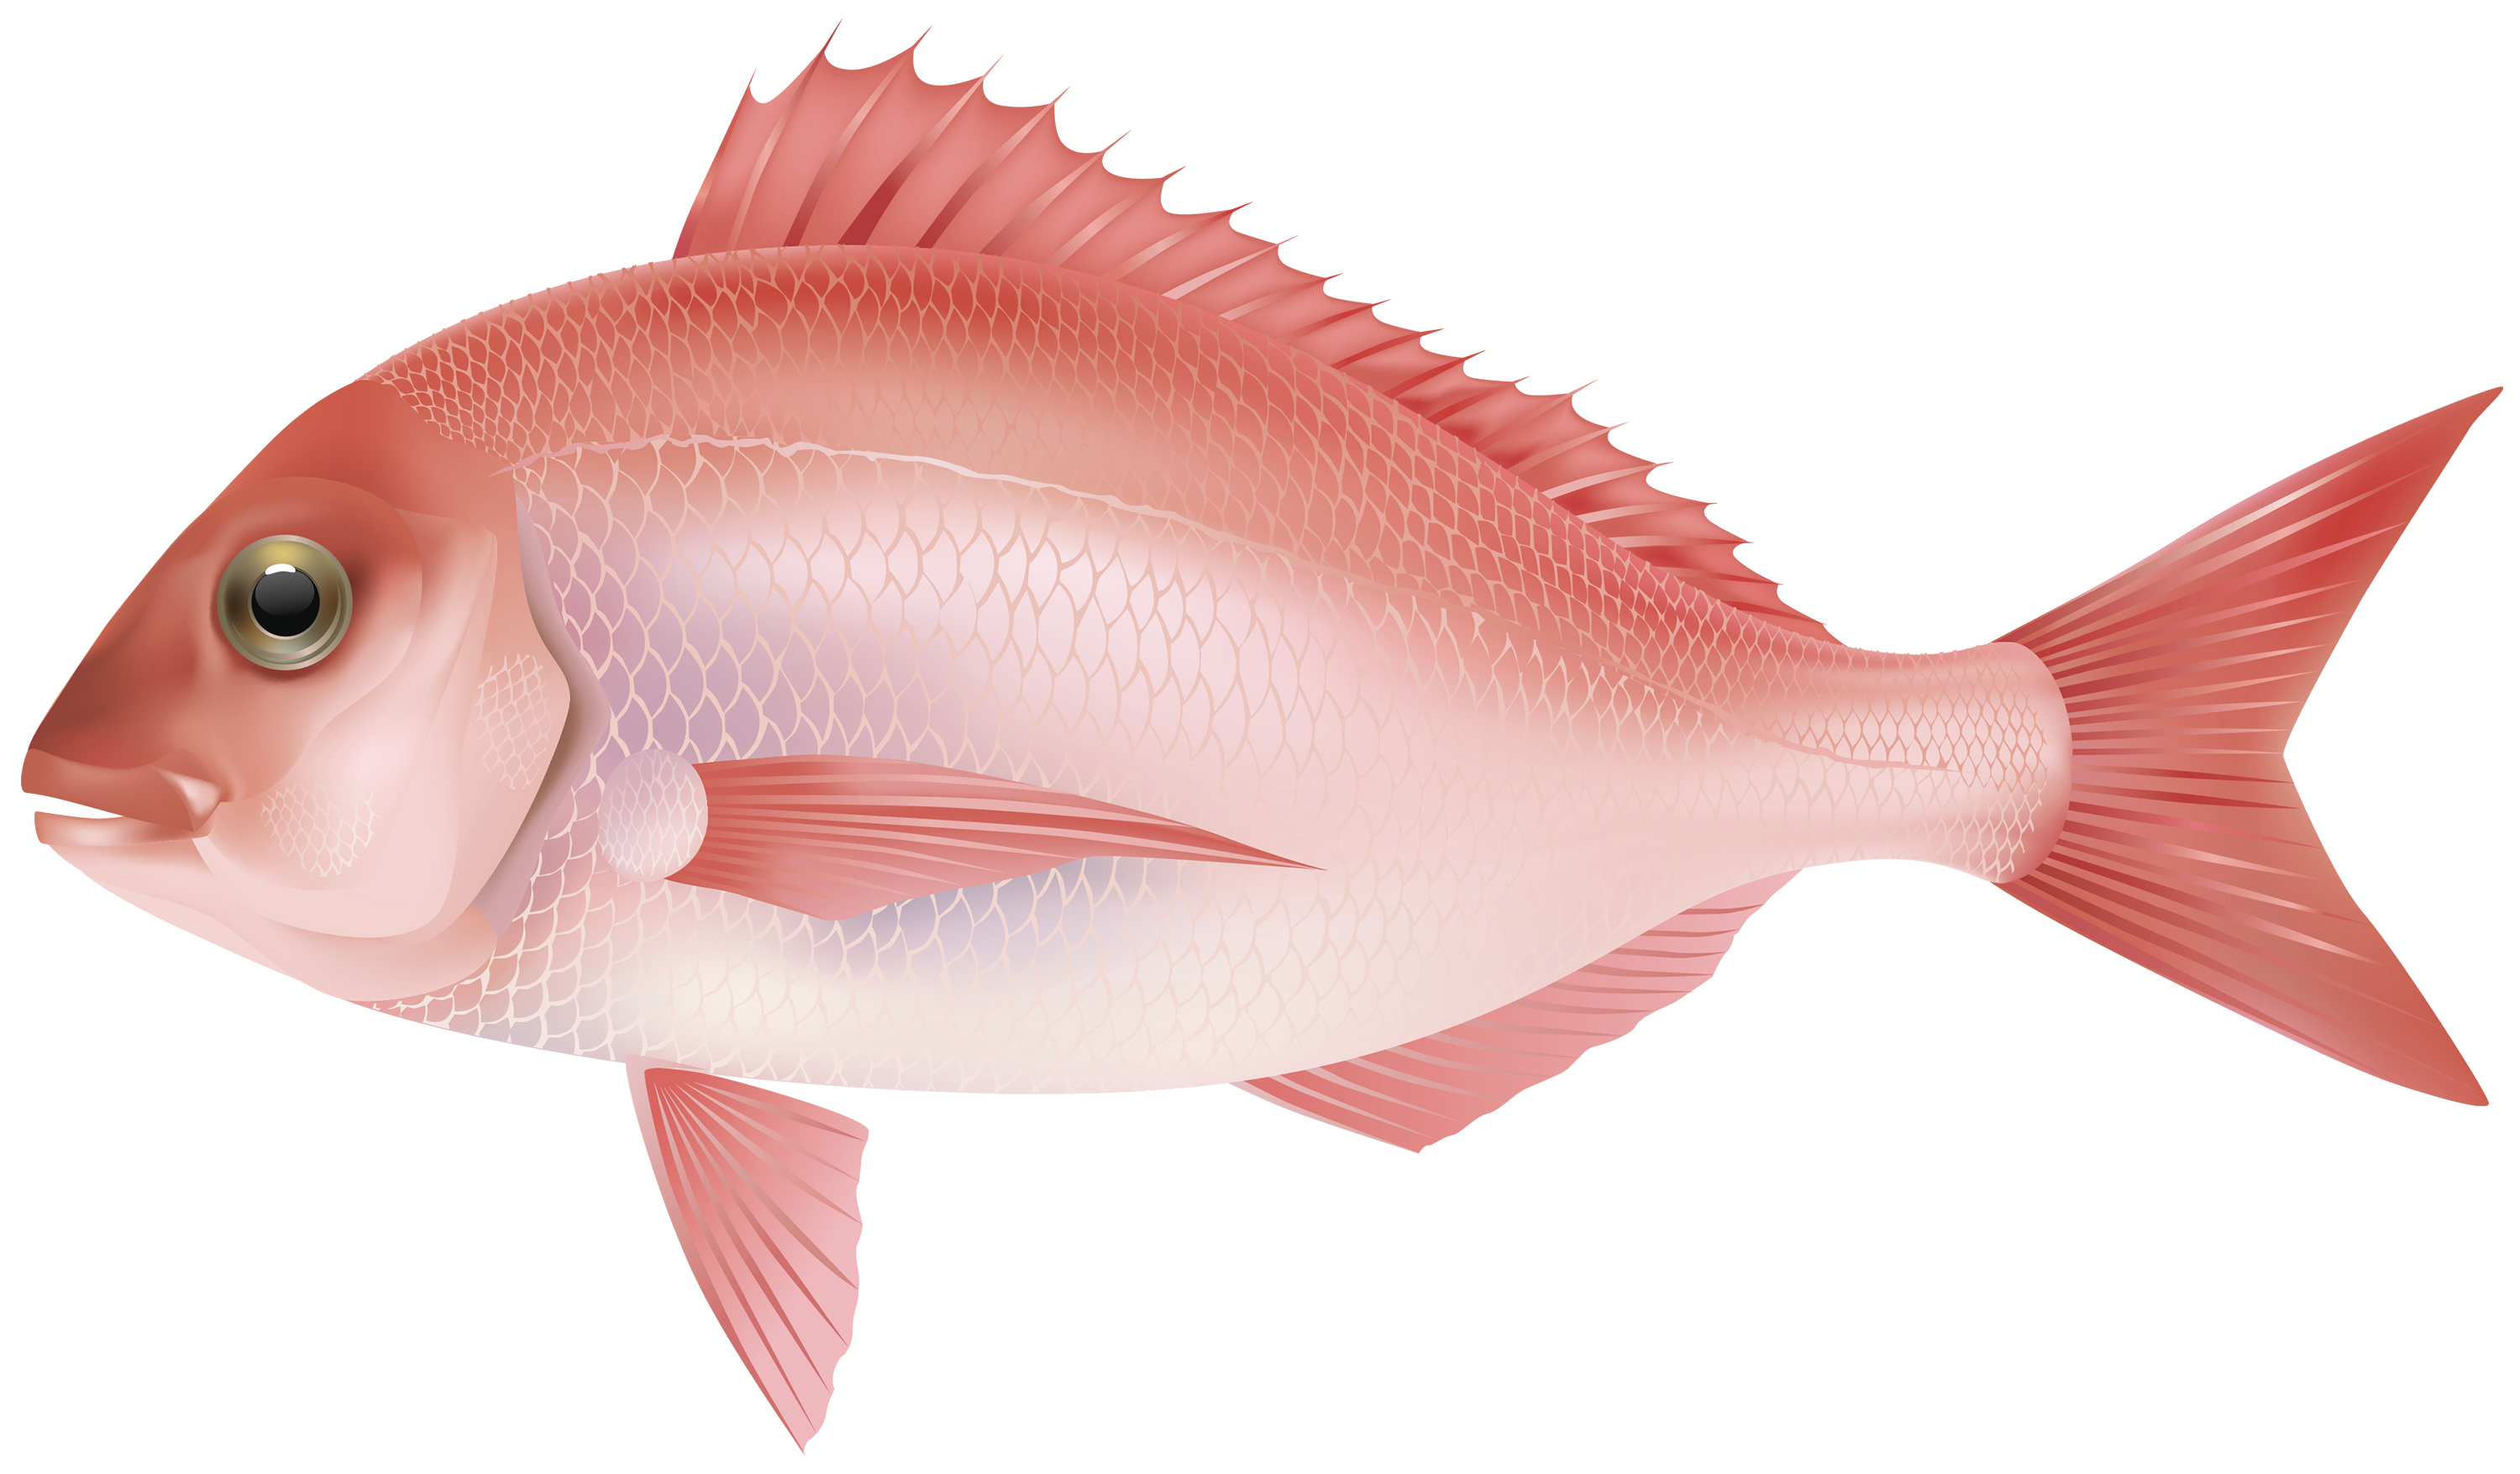 Fish PNG image, free download.